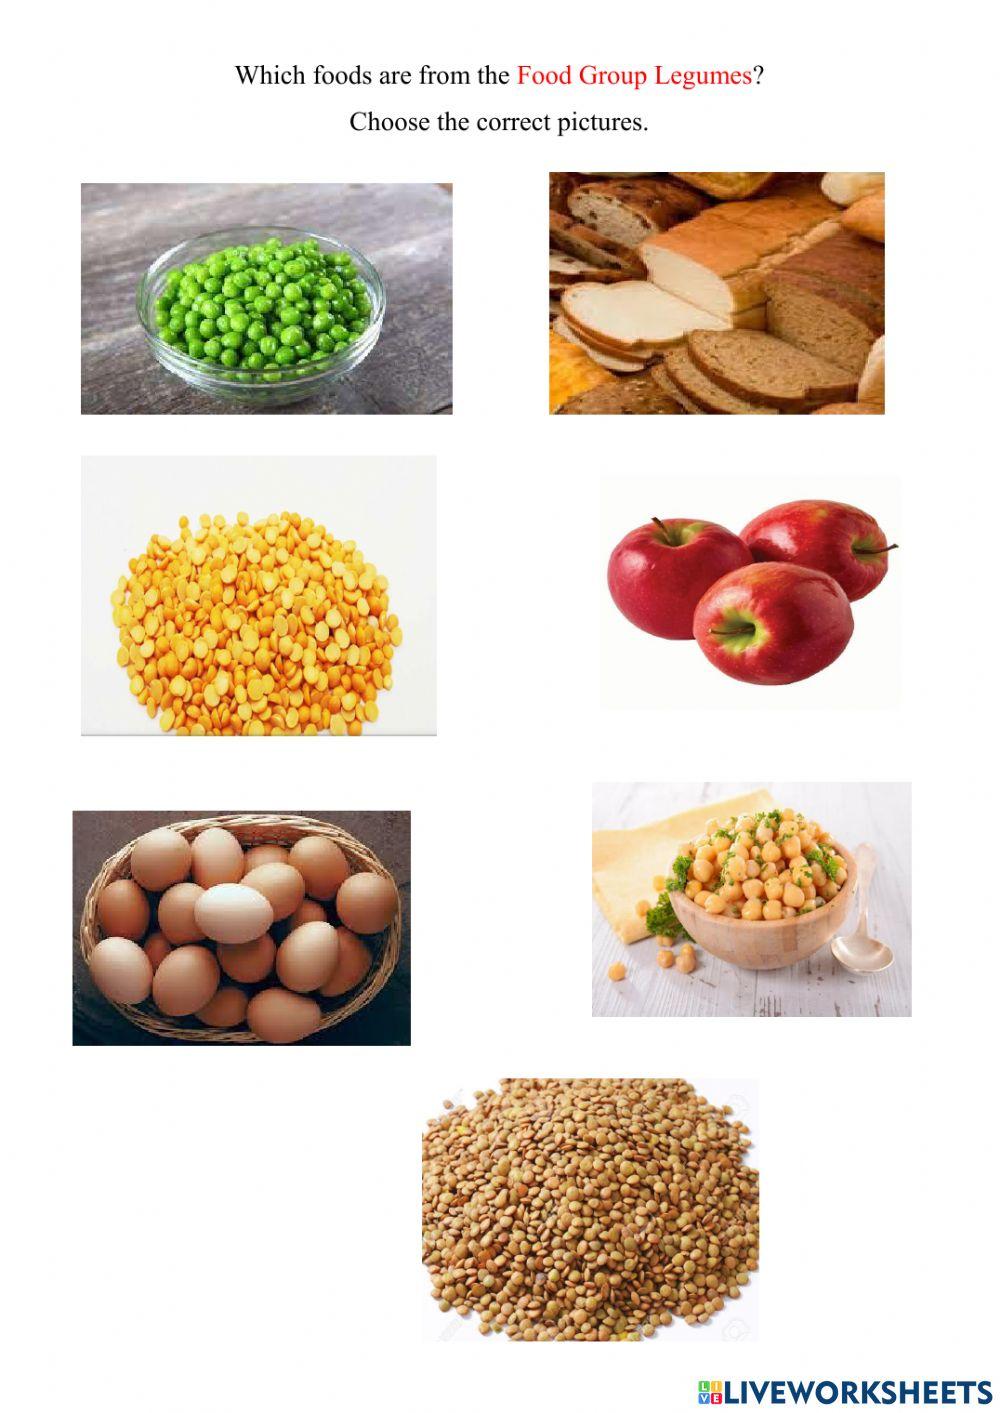 Food Groups - Legumes